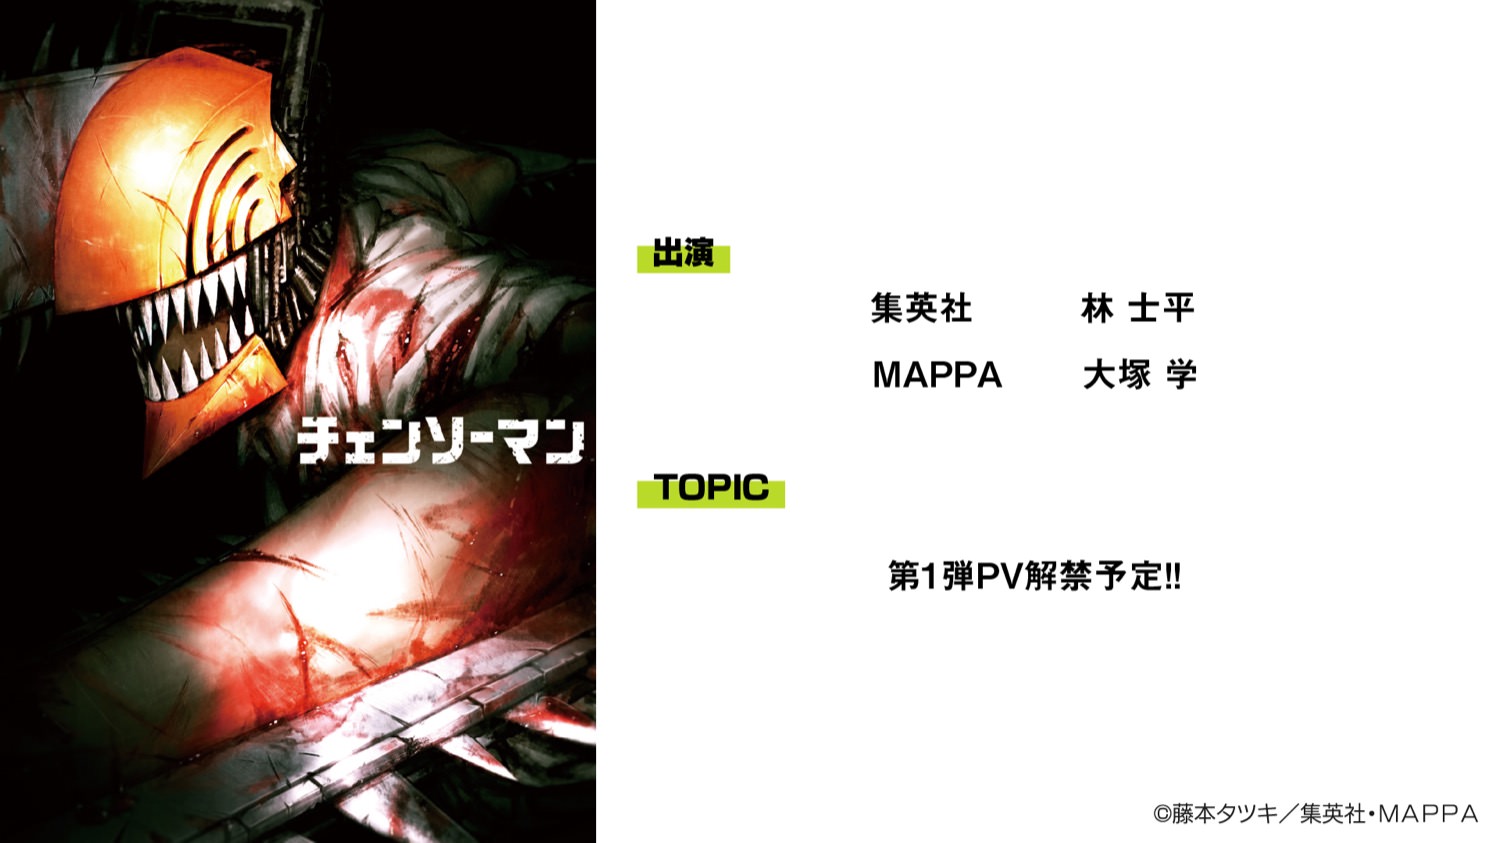 MAPPA STAGE 6月27日開催、チェンソーマンのアニメPV第1弾解禁予定